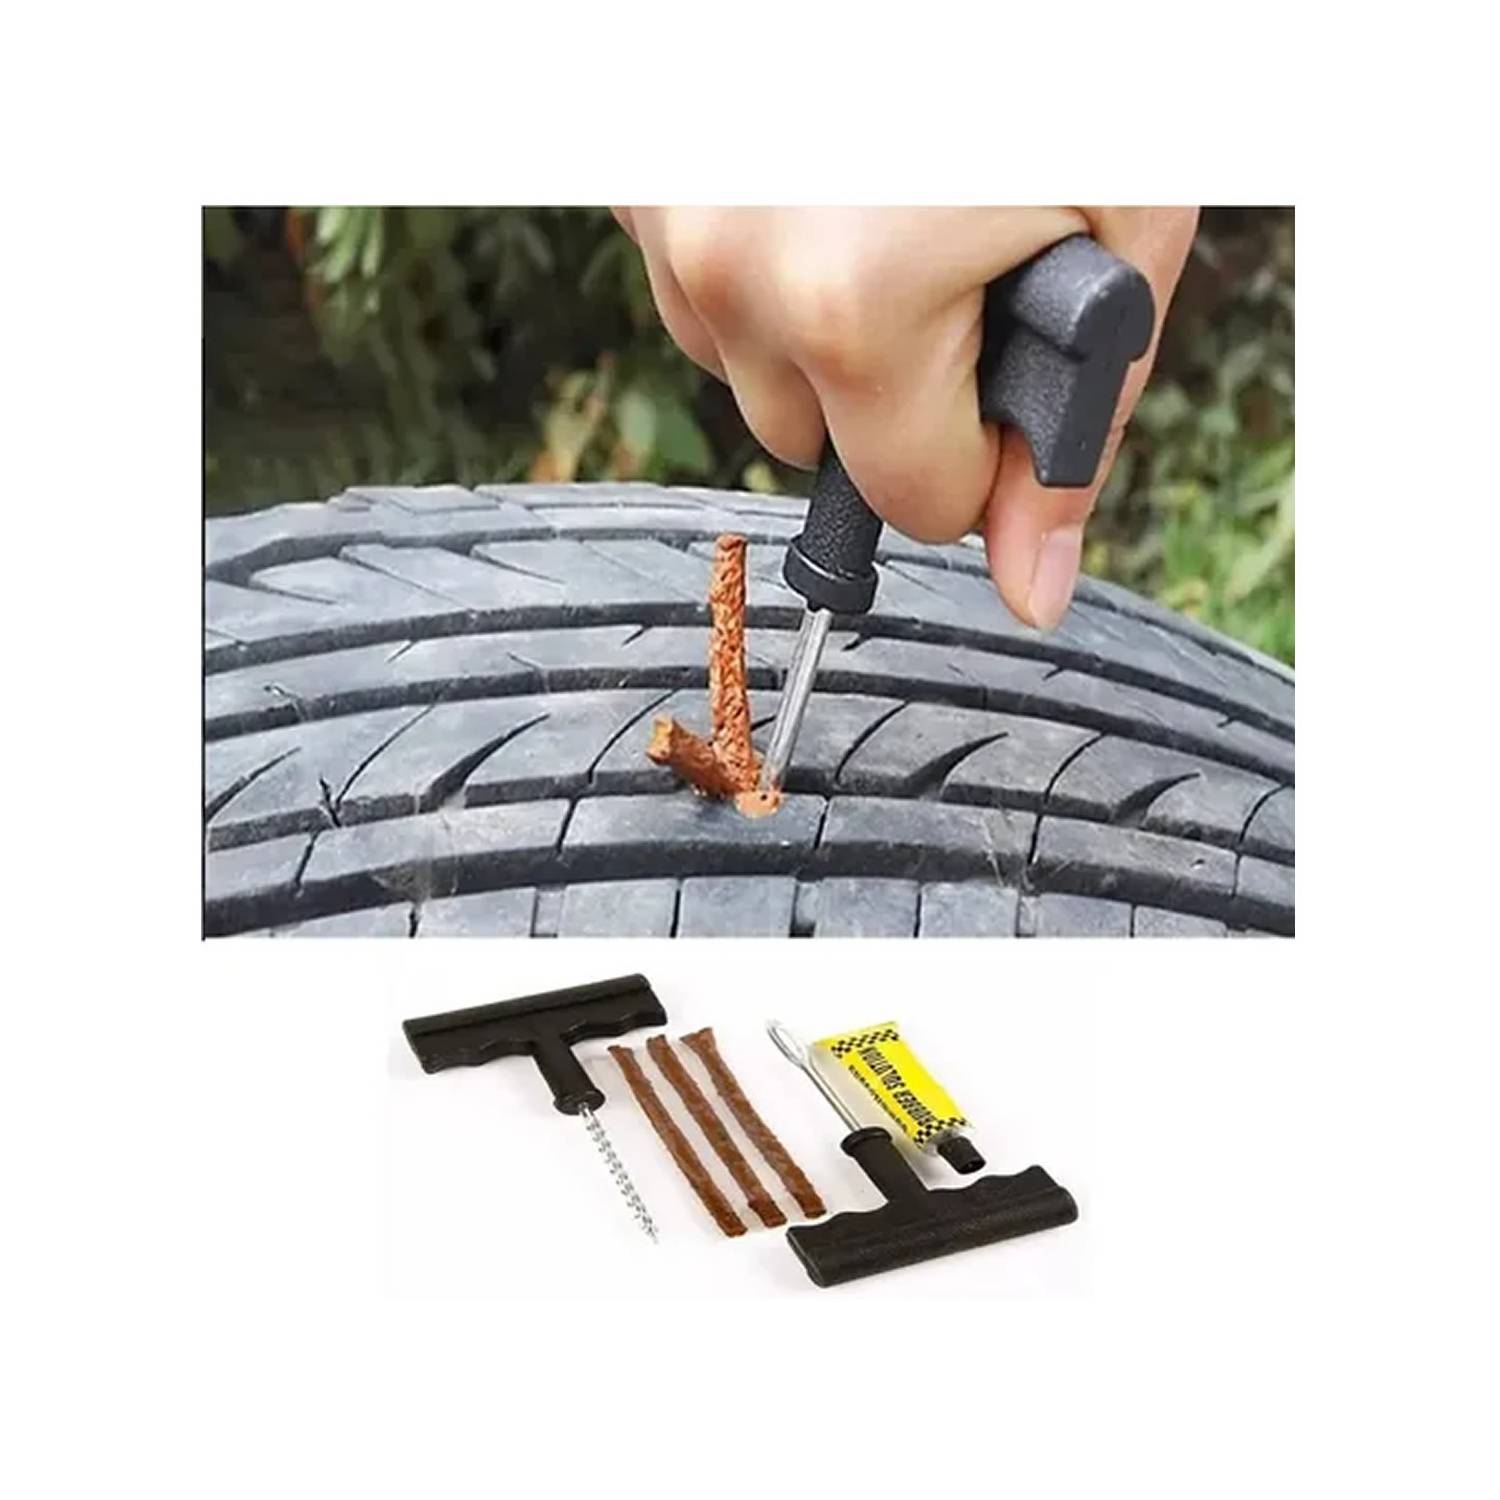 Reparar tu neumático con un kit anti pinchazo